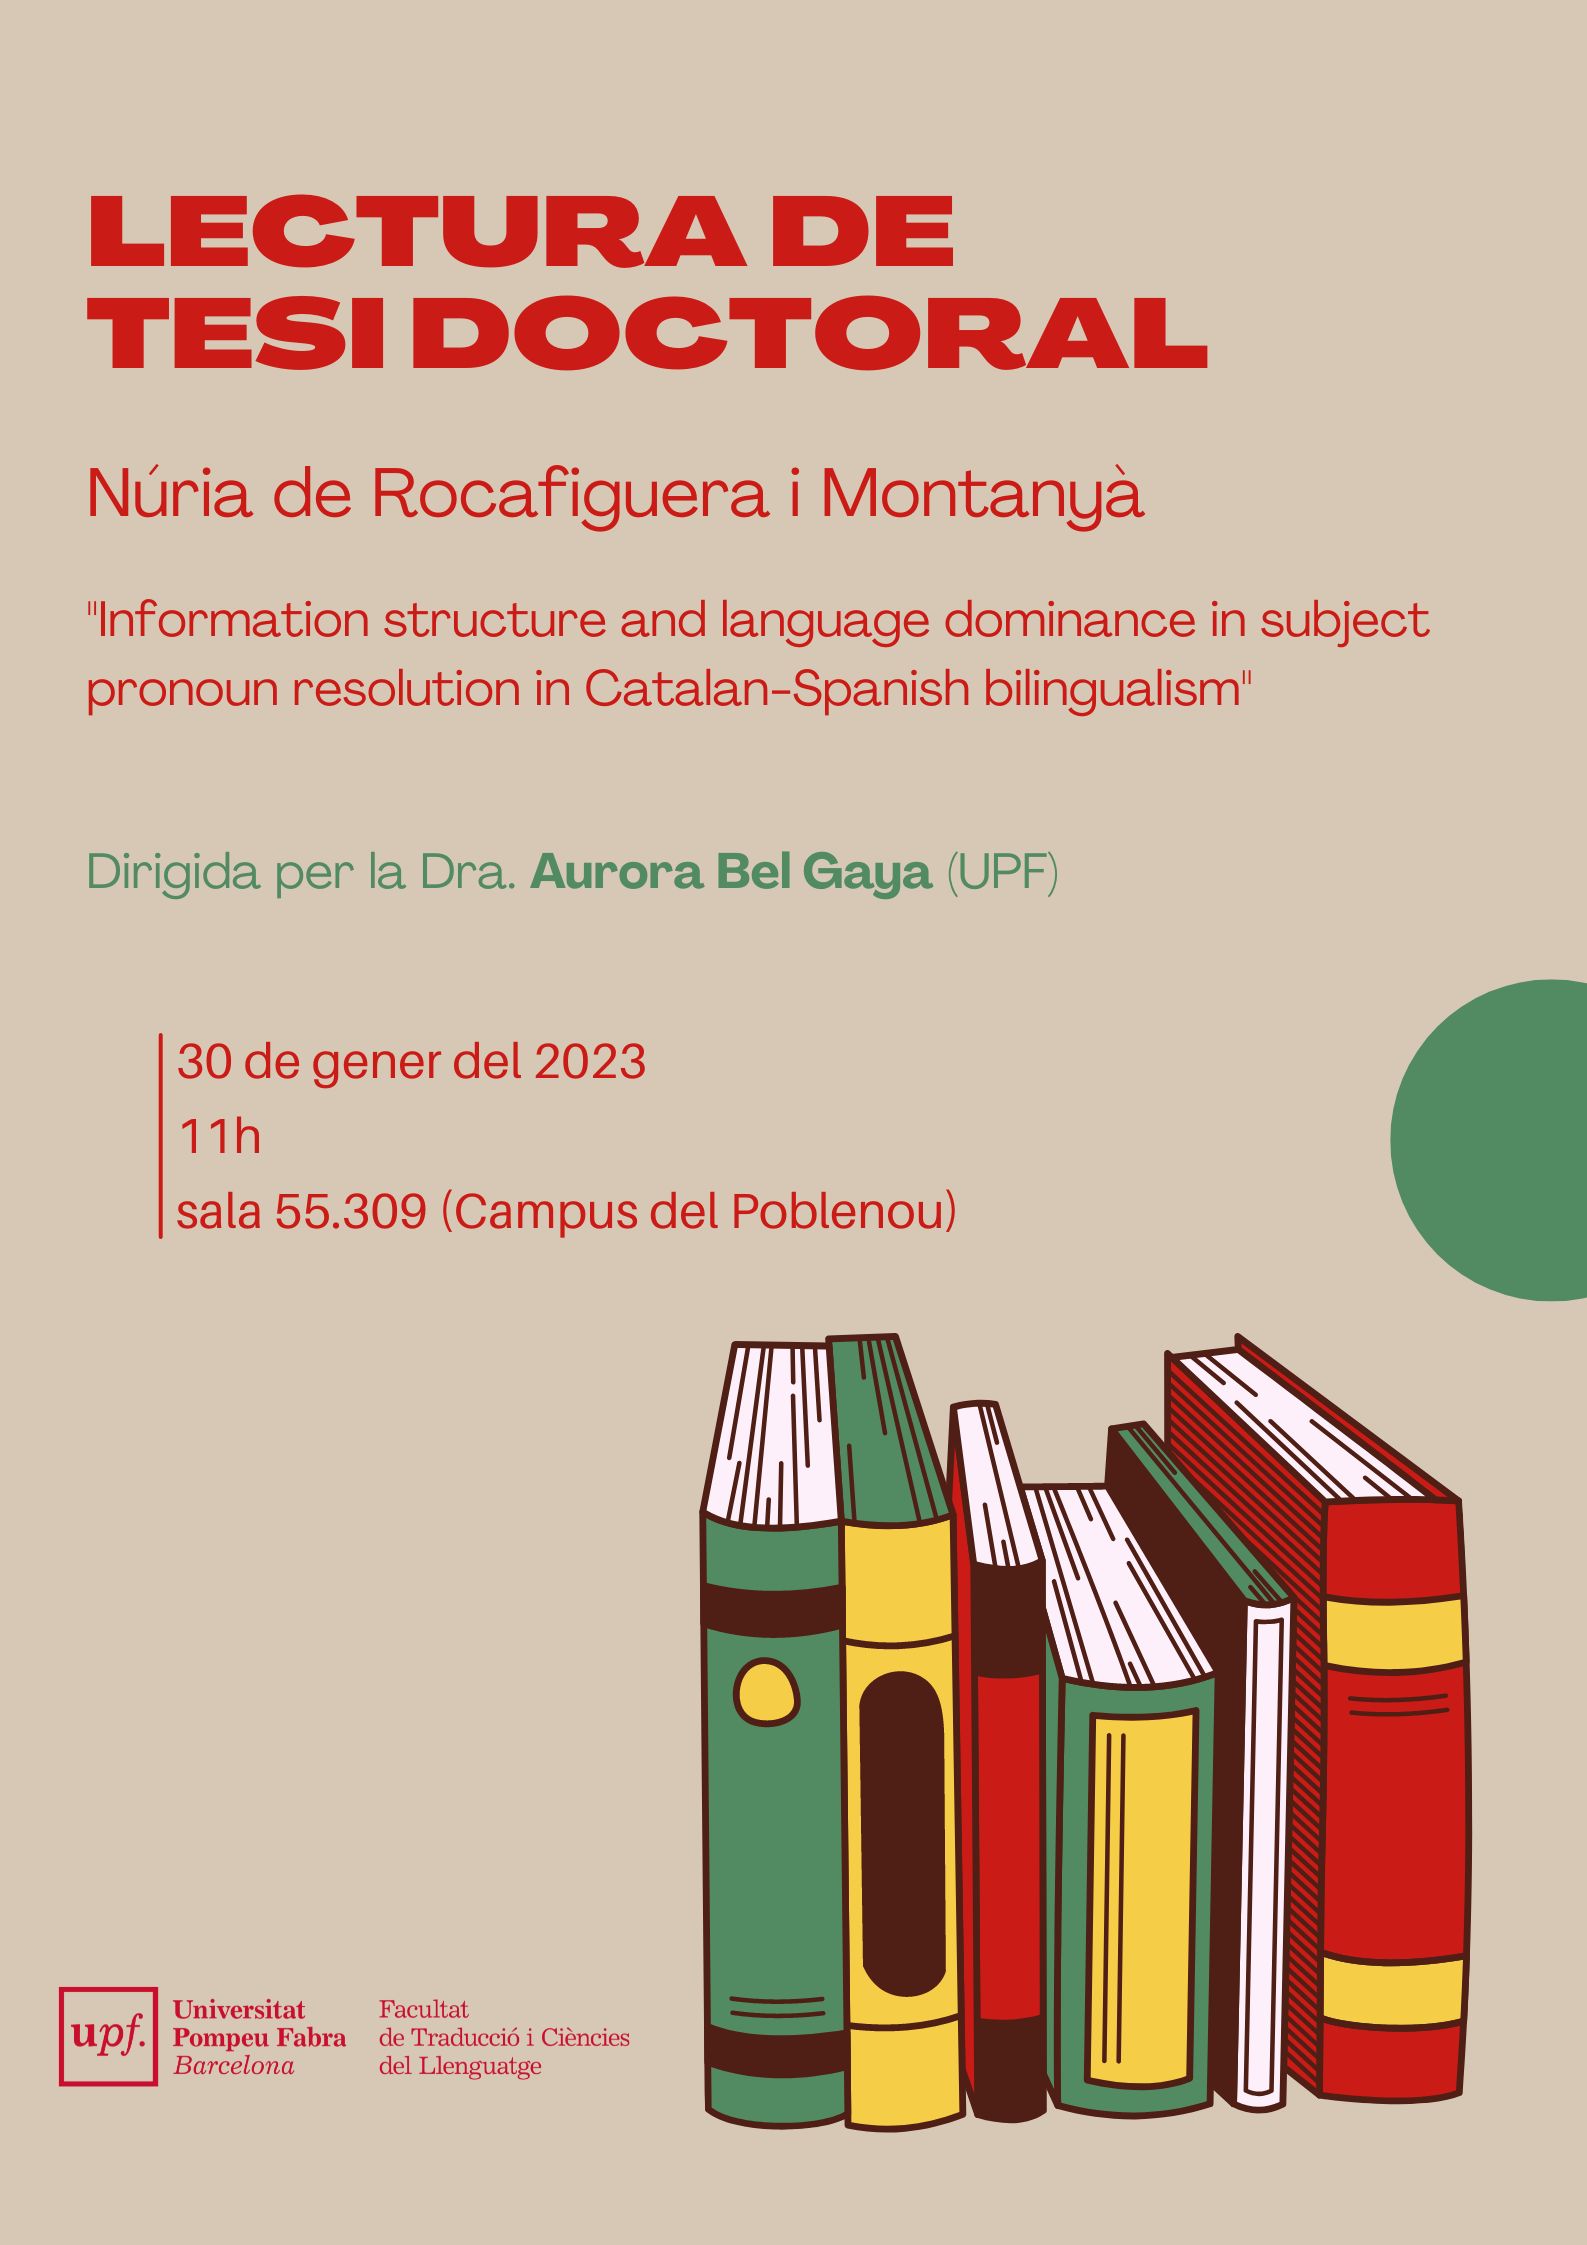 30/01/2023 Lectura de la tesi doctoral de Núria de Rocafiguera i Montanyà, a les 11.00 hores